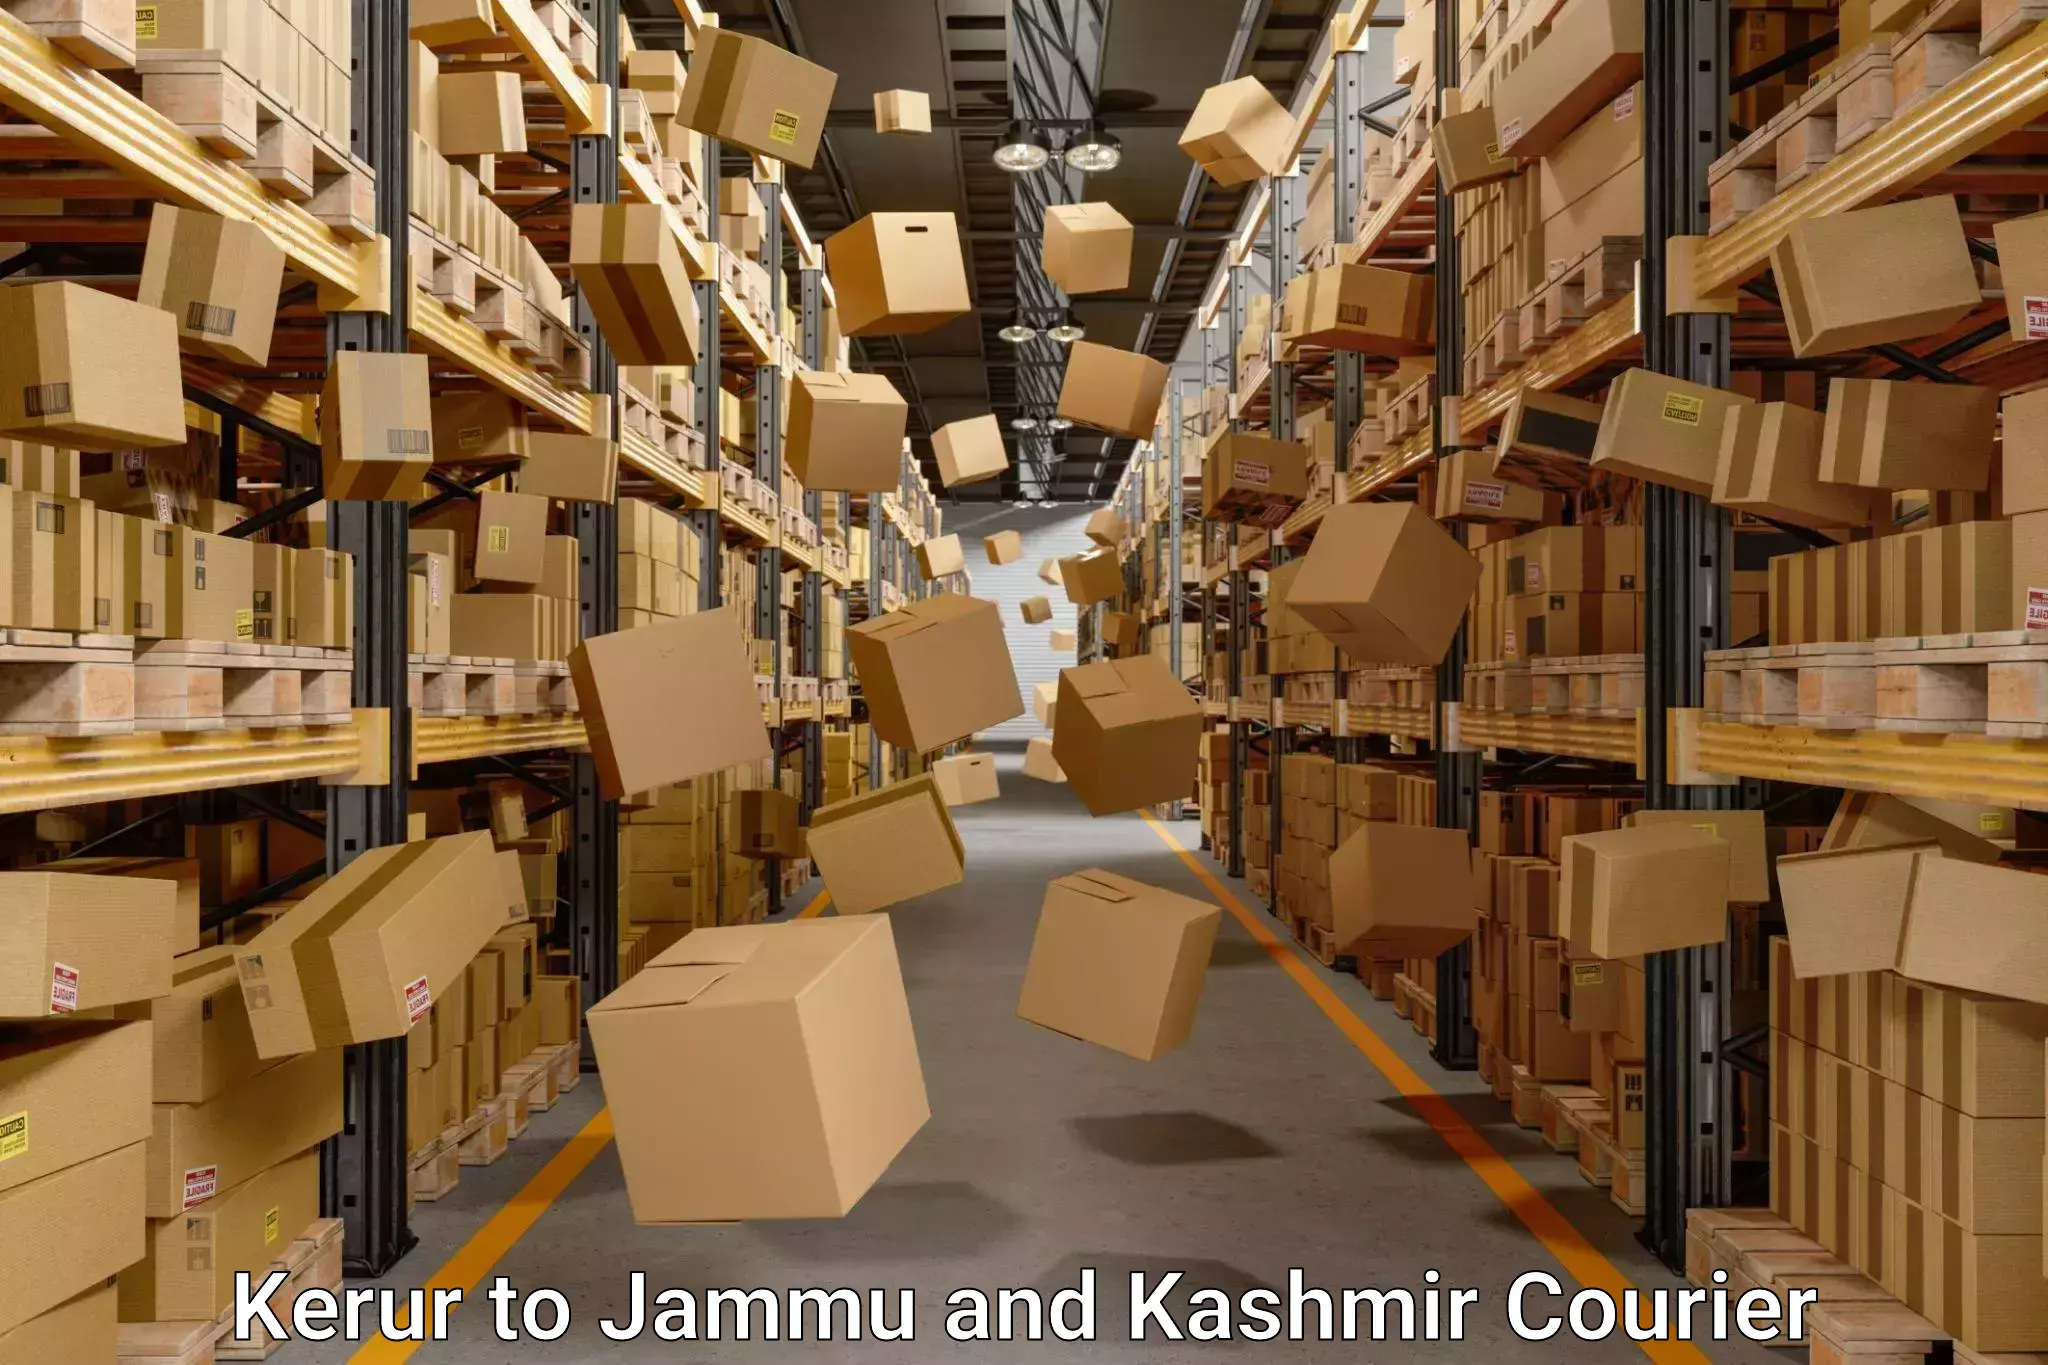 Moving and storage services Kerur to Srinagar Kashmir